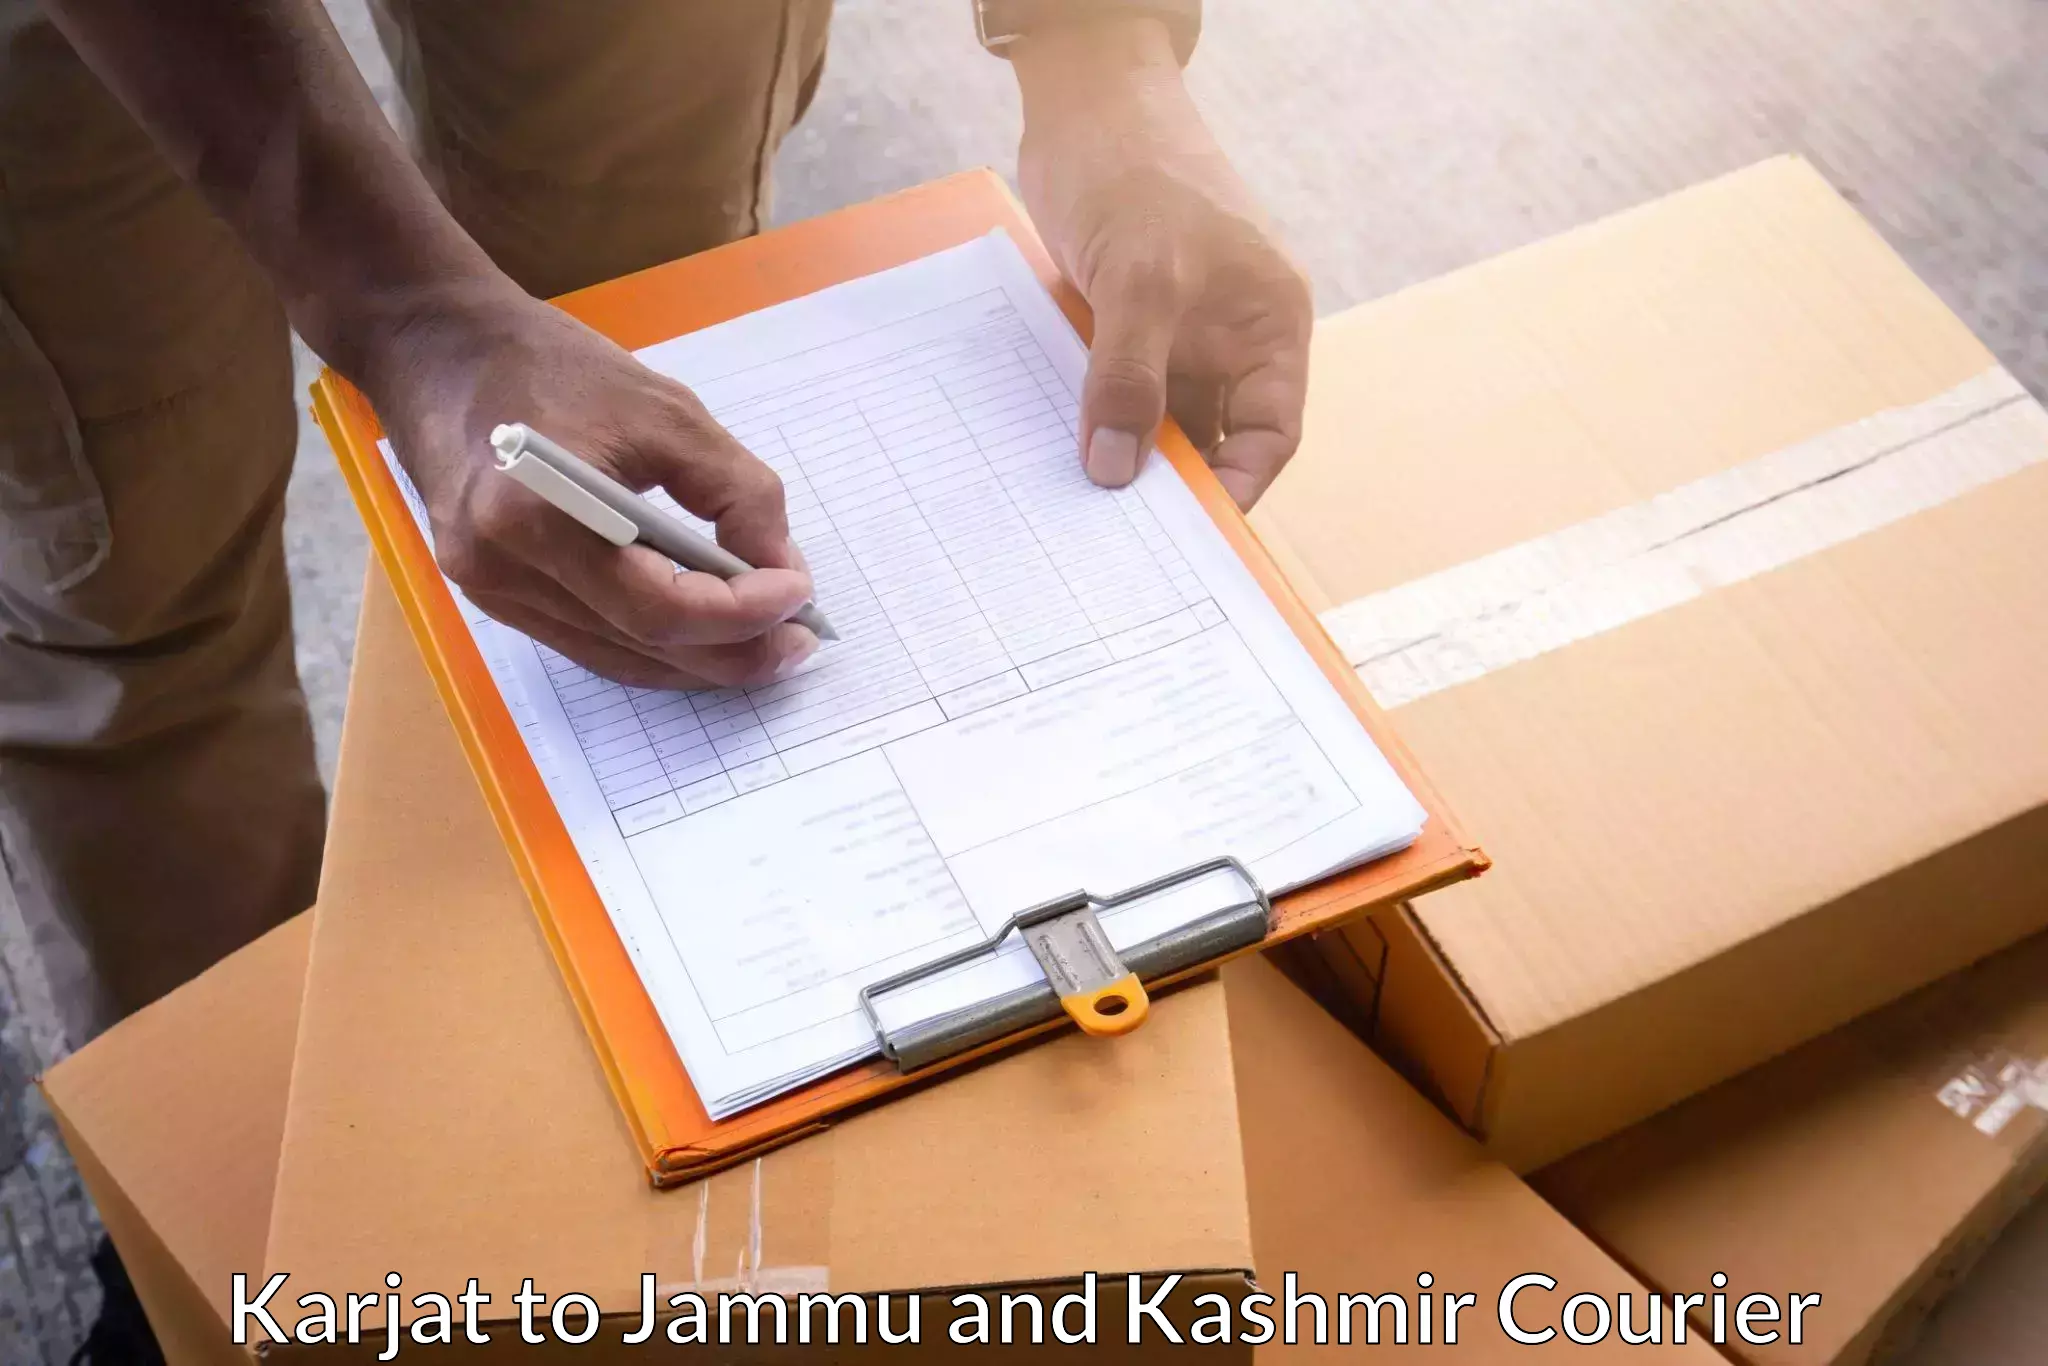 Professional courier handling Karjat to Kargil